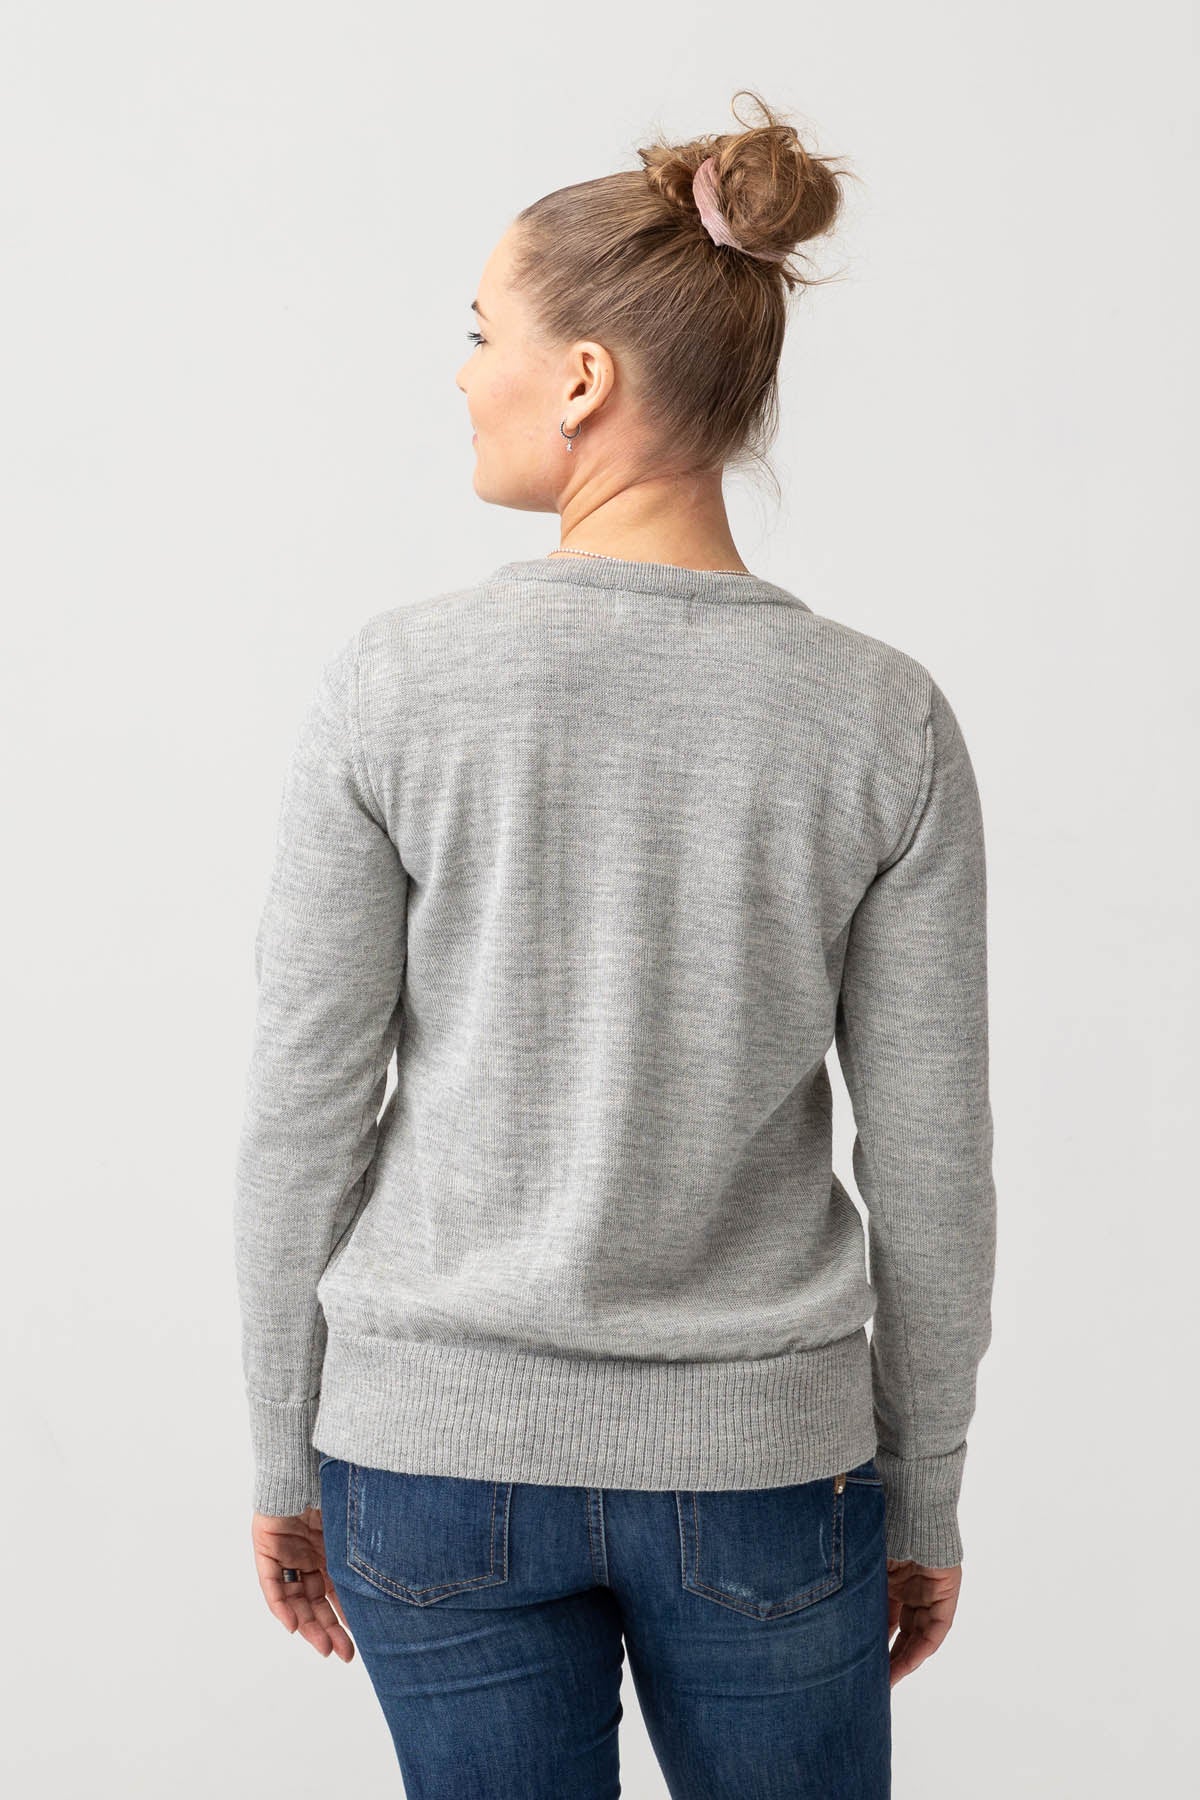 Ollanta sweater - light gray